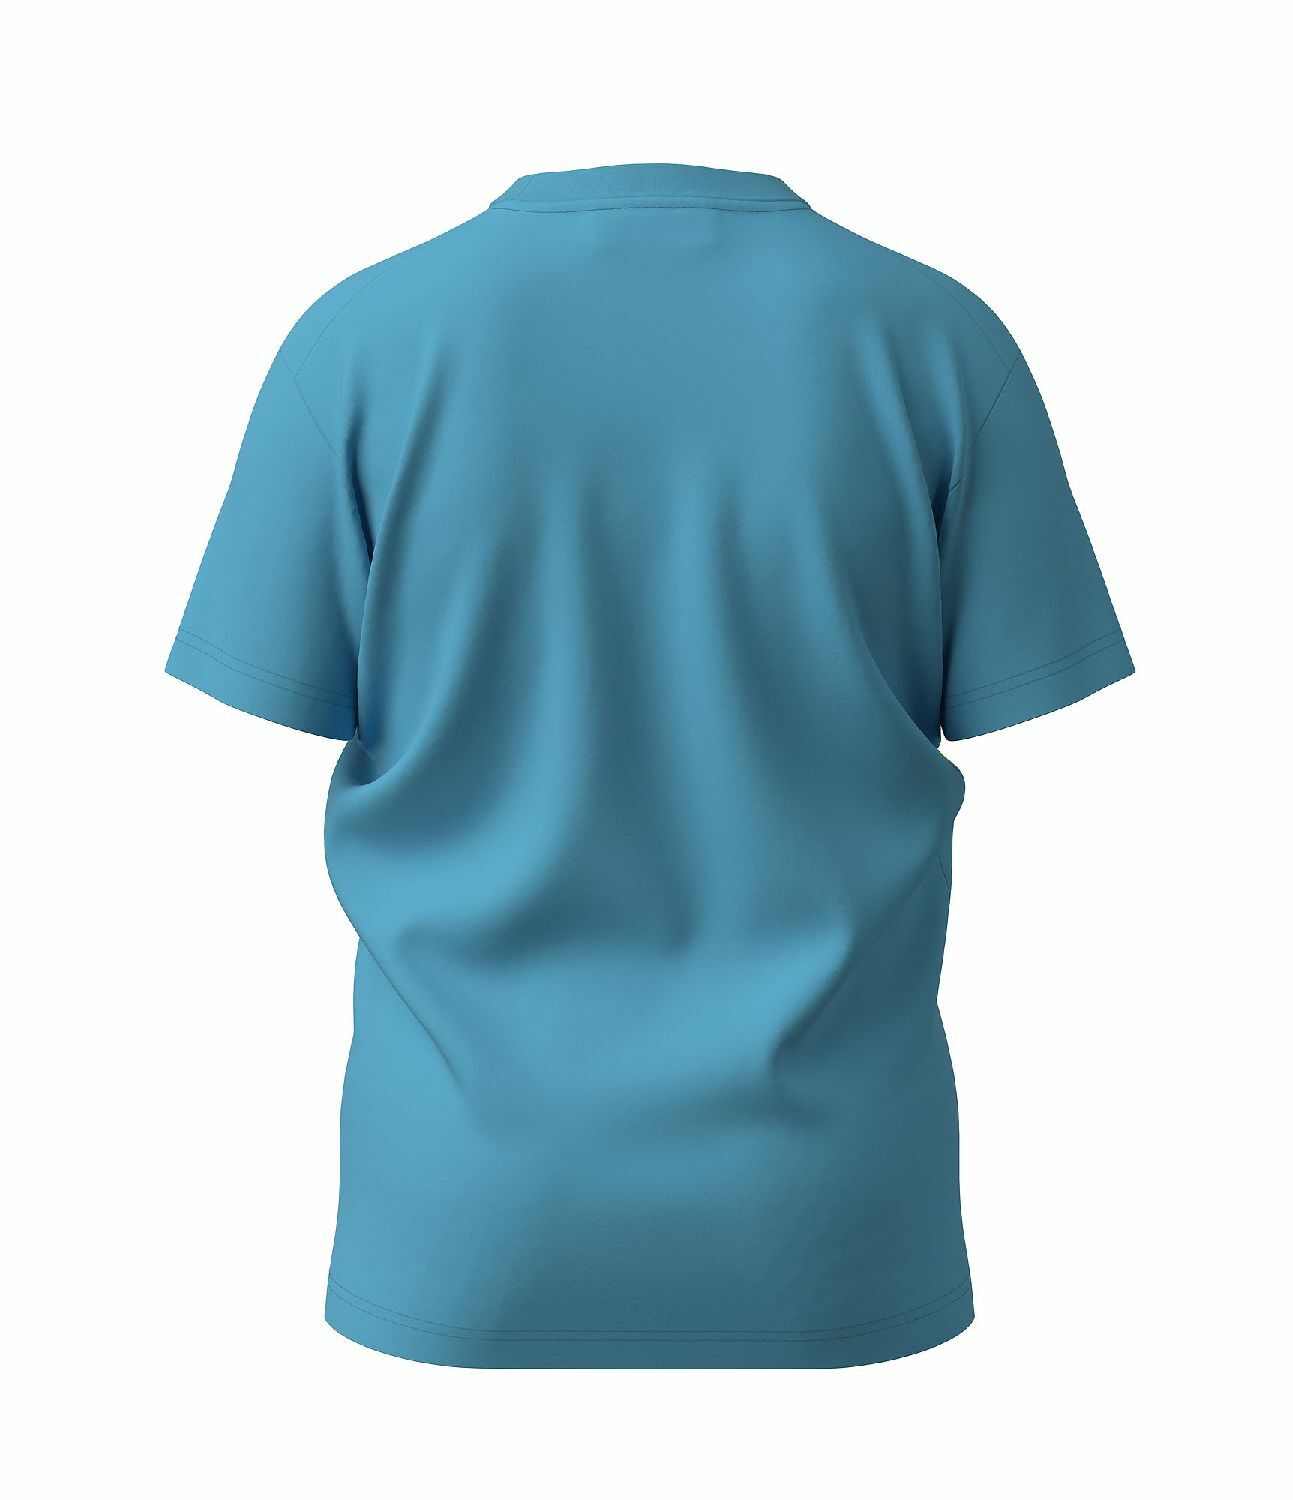 Pa kapperszaak Vader DSQUARED2 - Icon Tshirt Cool fit - blauw online kopen bij Prisca Kindermode  en Tienermode. DQ1359 D00MV-DQ818 Prisca junior